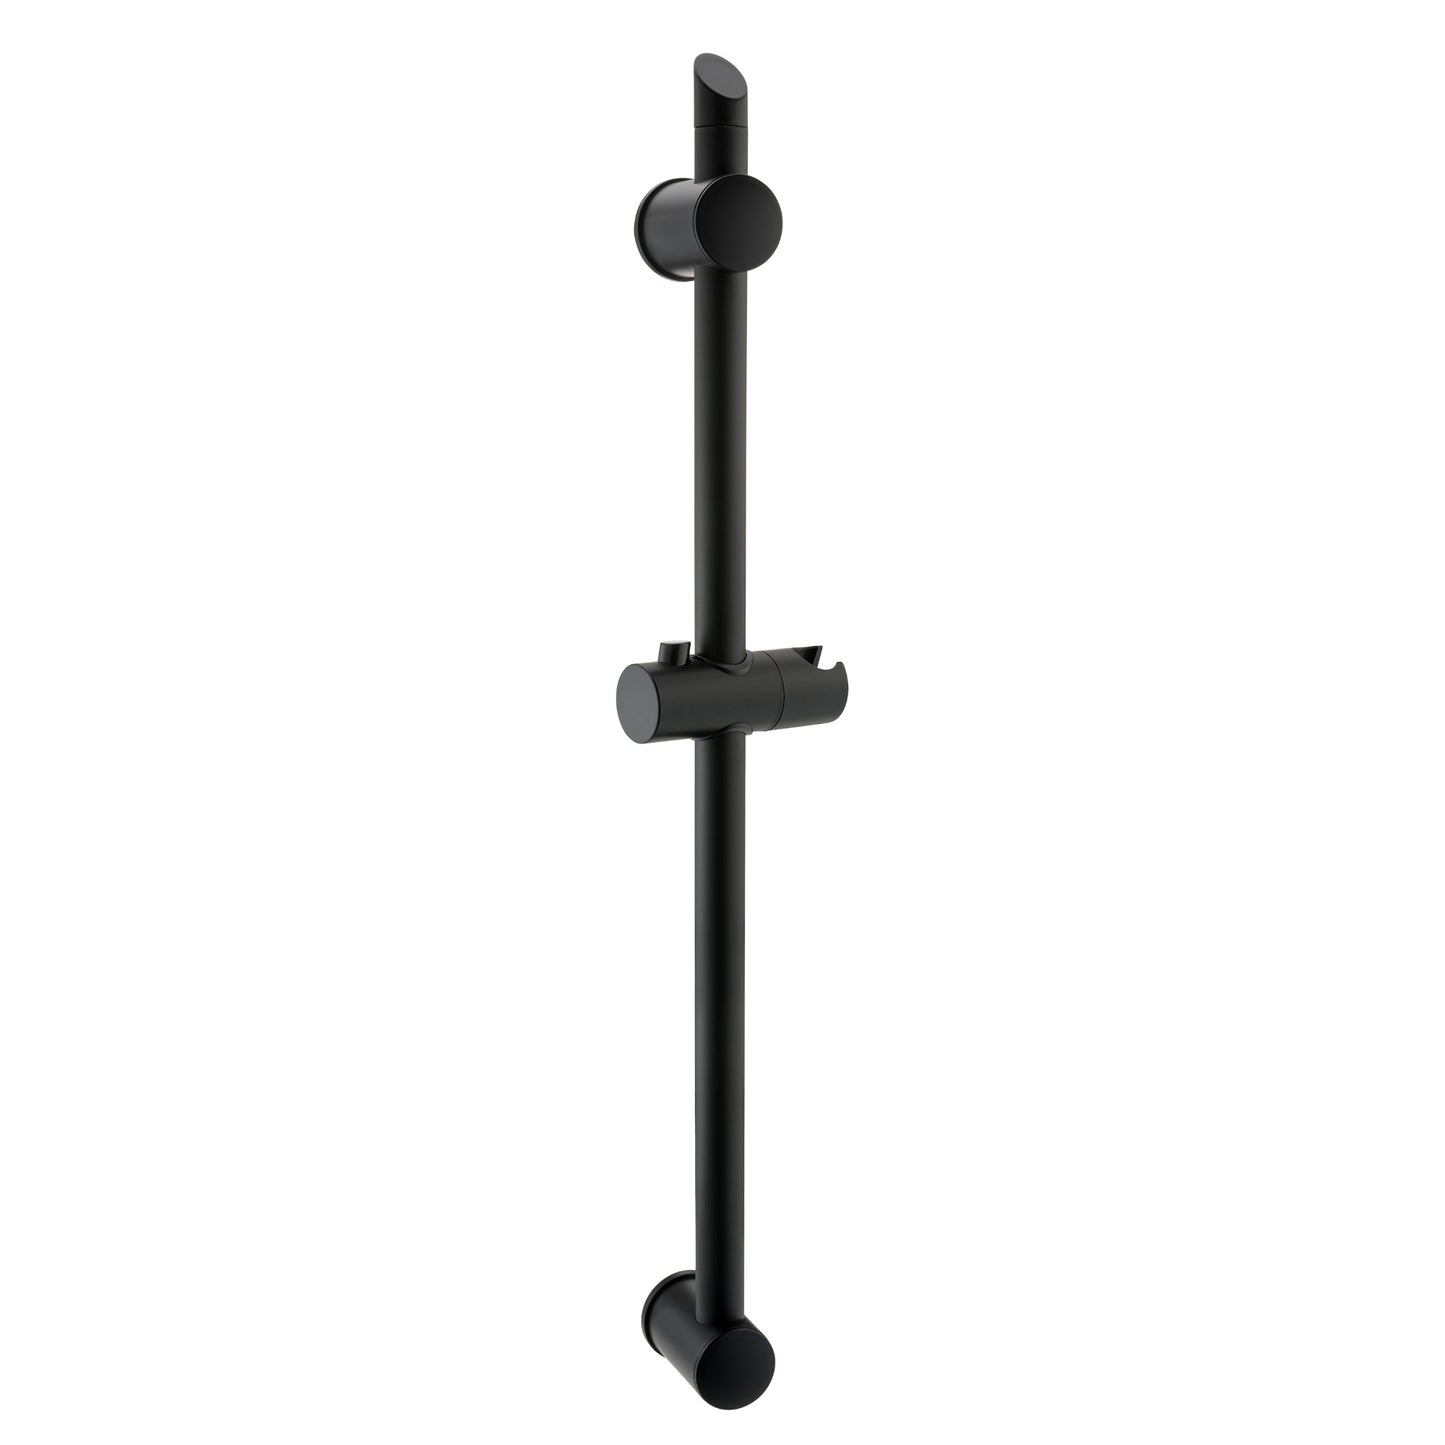 Adjustable sliding shower rail - black